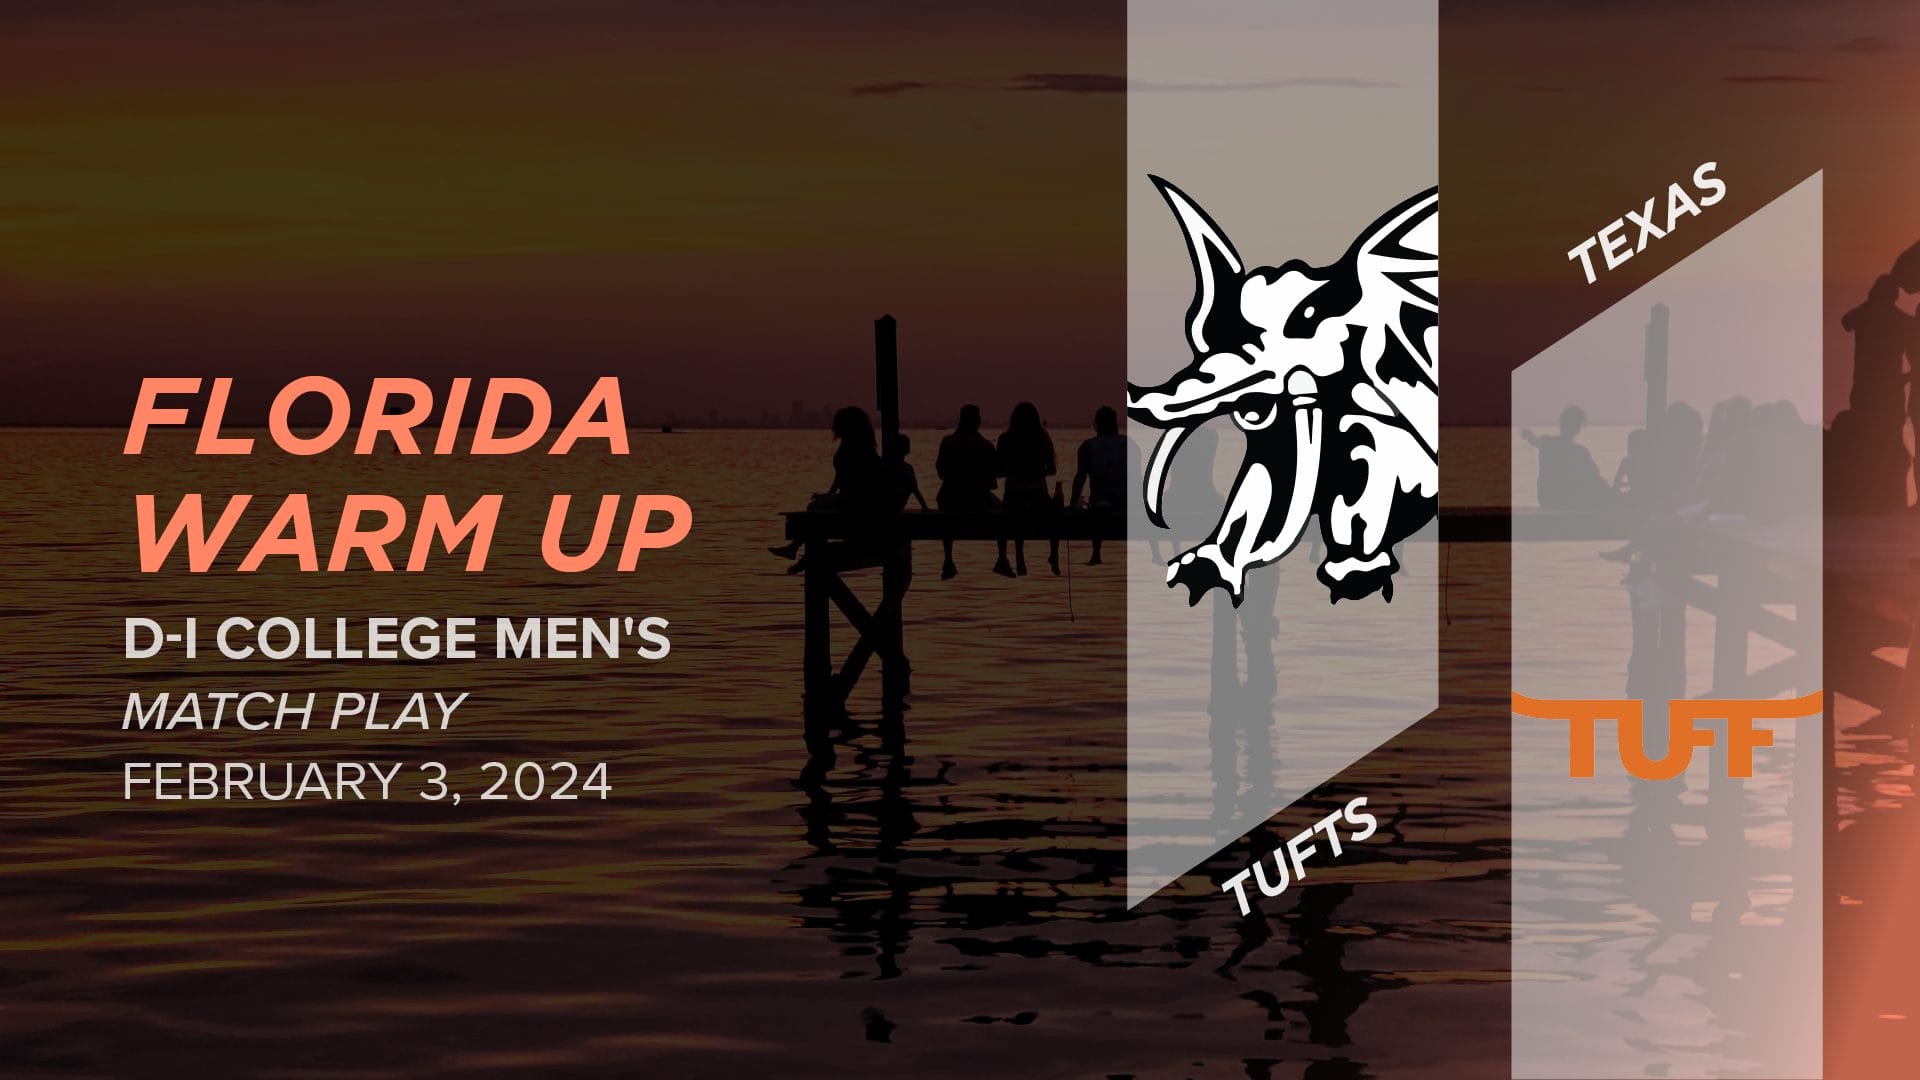 Tufts vs. Texas (Men's Match Play) 2024 Florida Warm Up (DI Men's